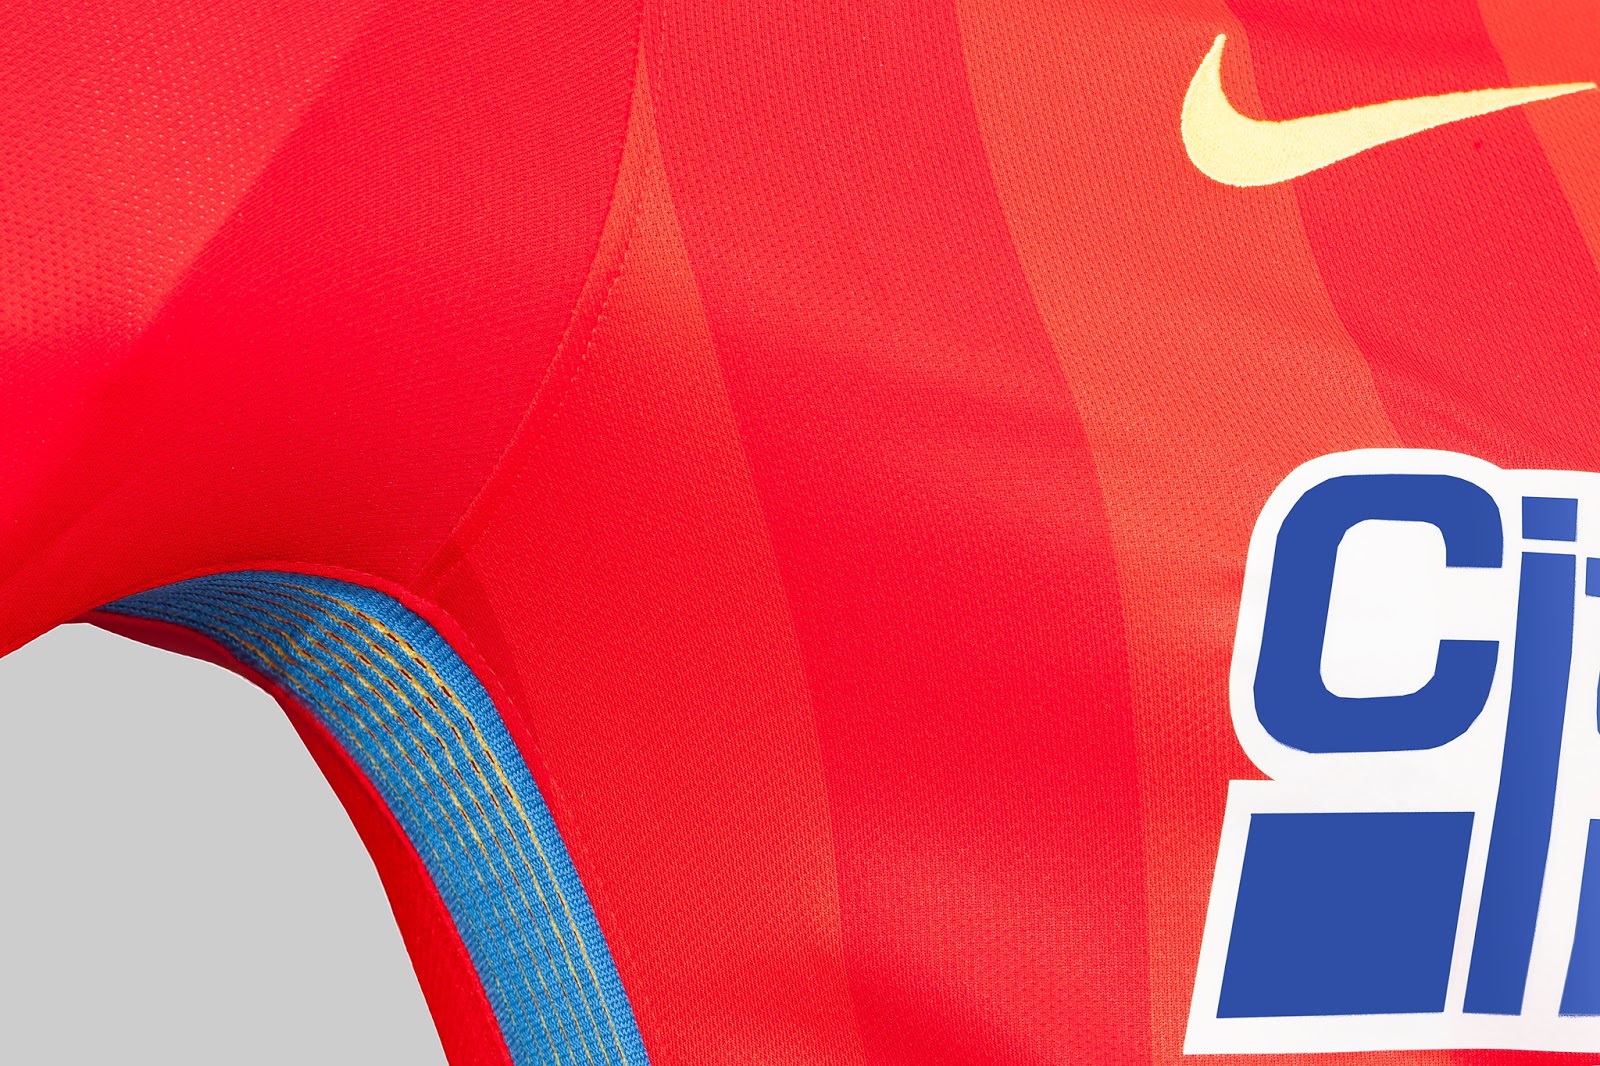 Nike Steaua Bucharest 17-18 Home Kit Released - Footy Headlines